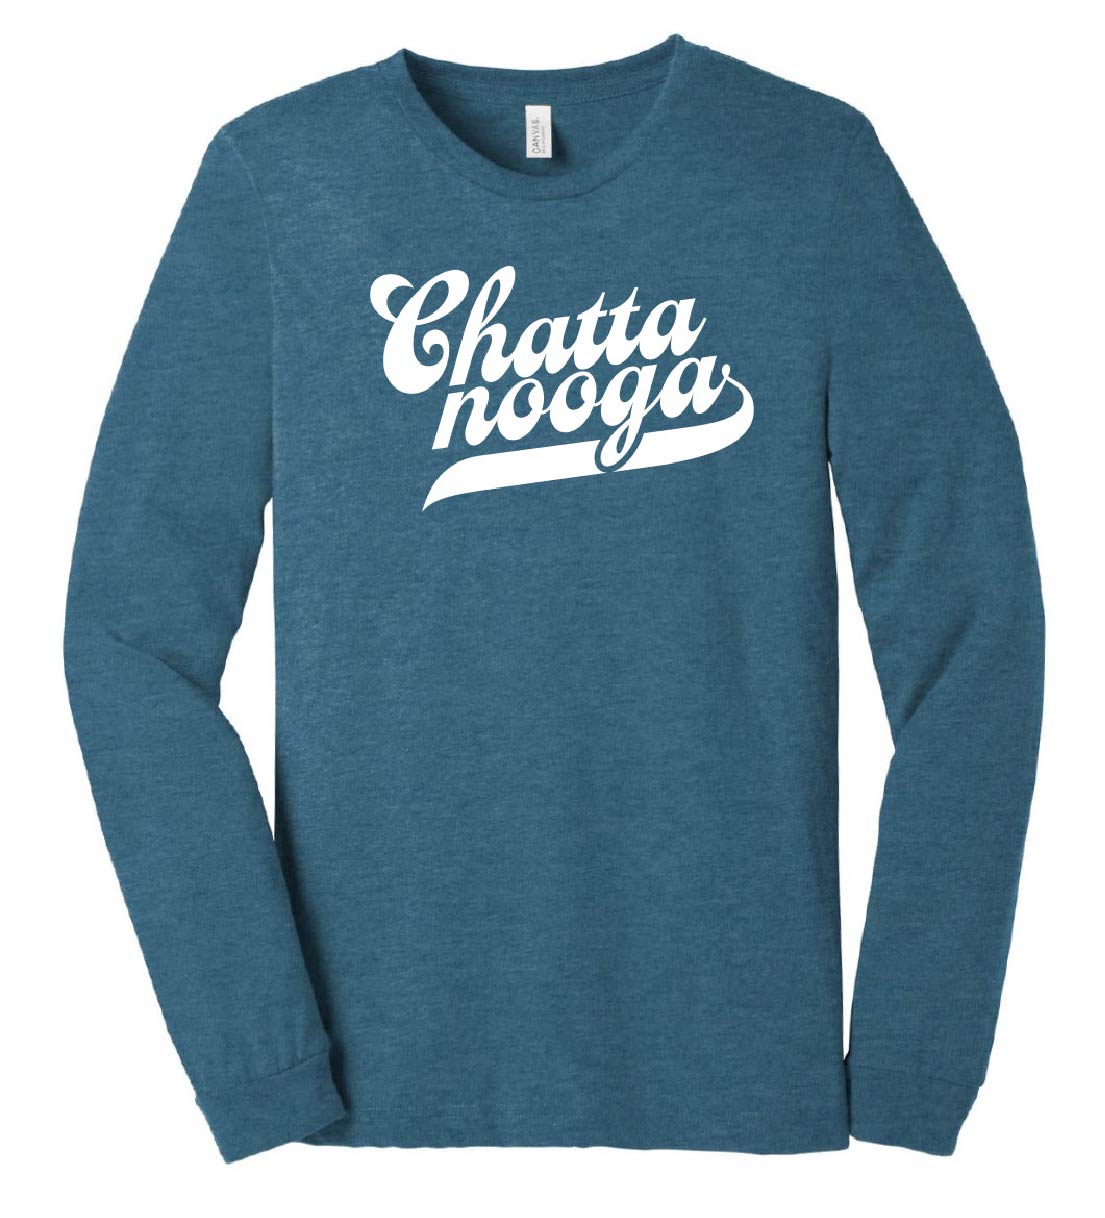 Chattanooga Long Sleeve Shirt